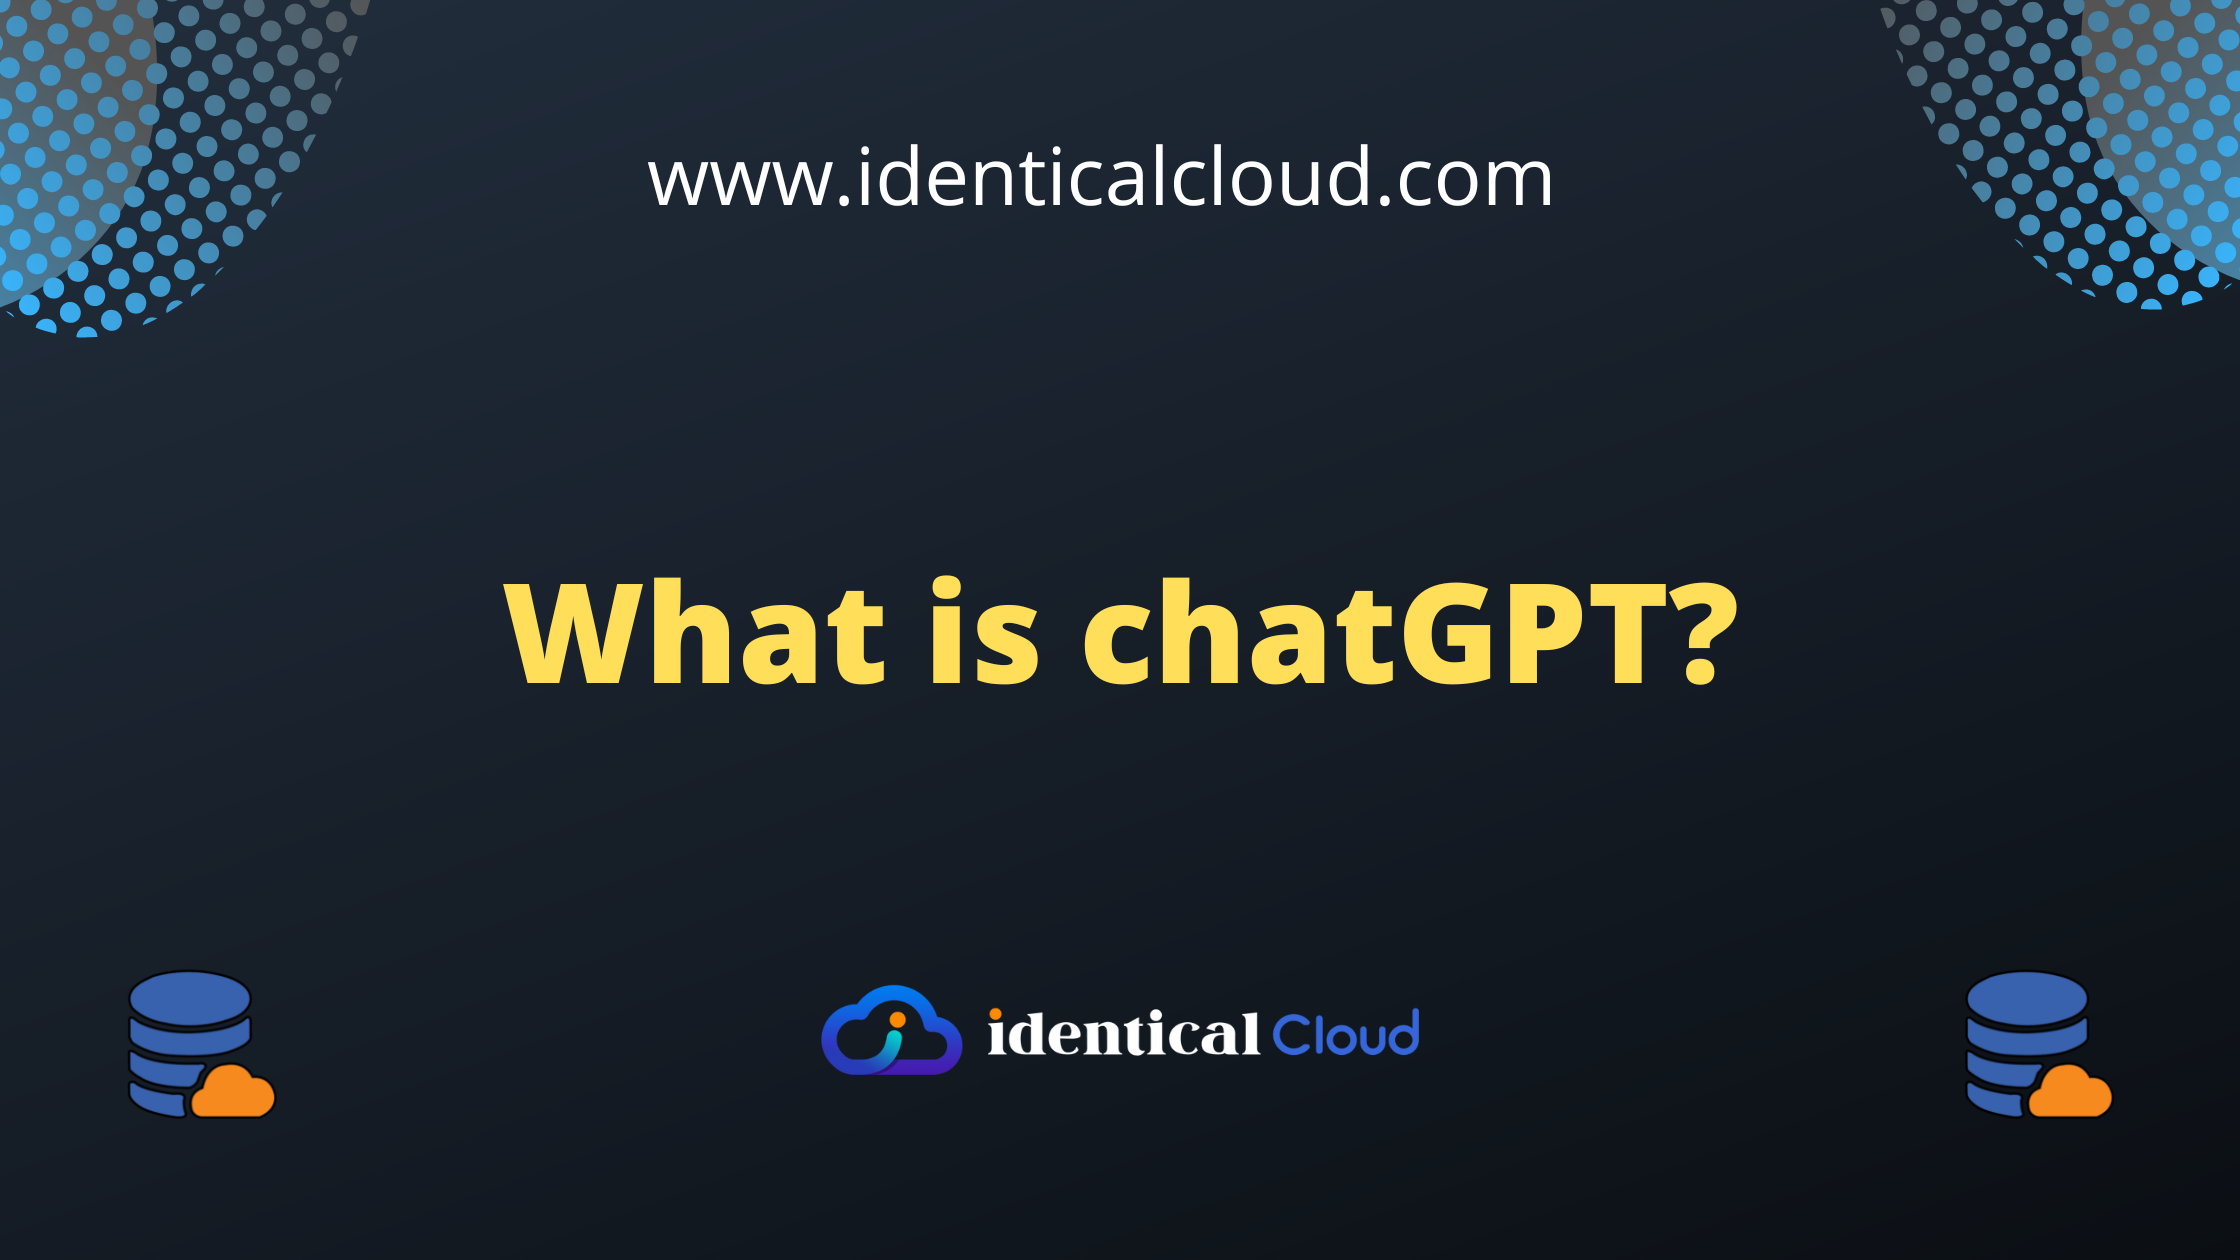 What is chatGPT? - identicalcloud.com